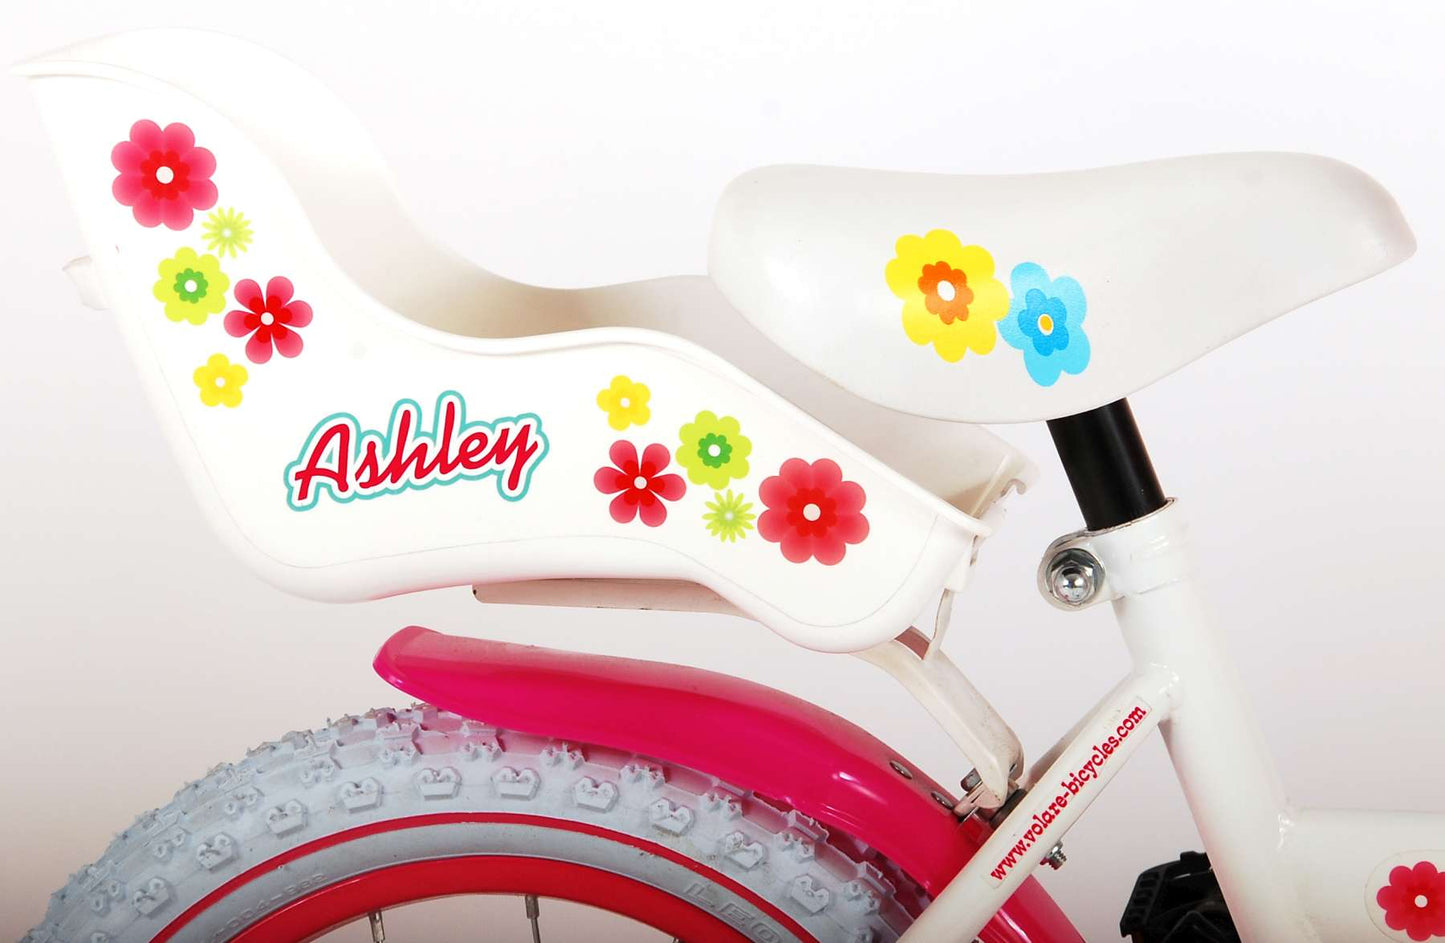 Bicycle per bambini di Vlatare Ashley - Girls - 14 pollici - Bianco - 95% assemblato